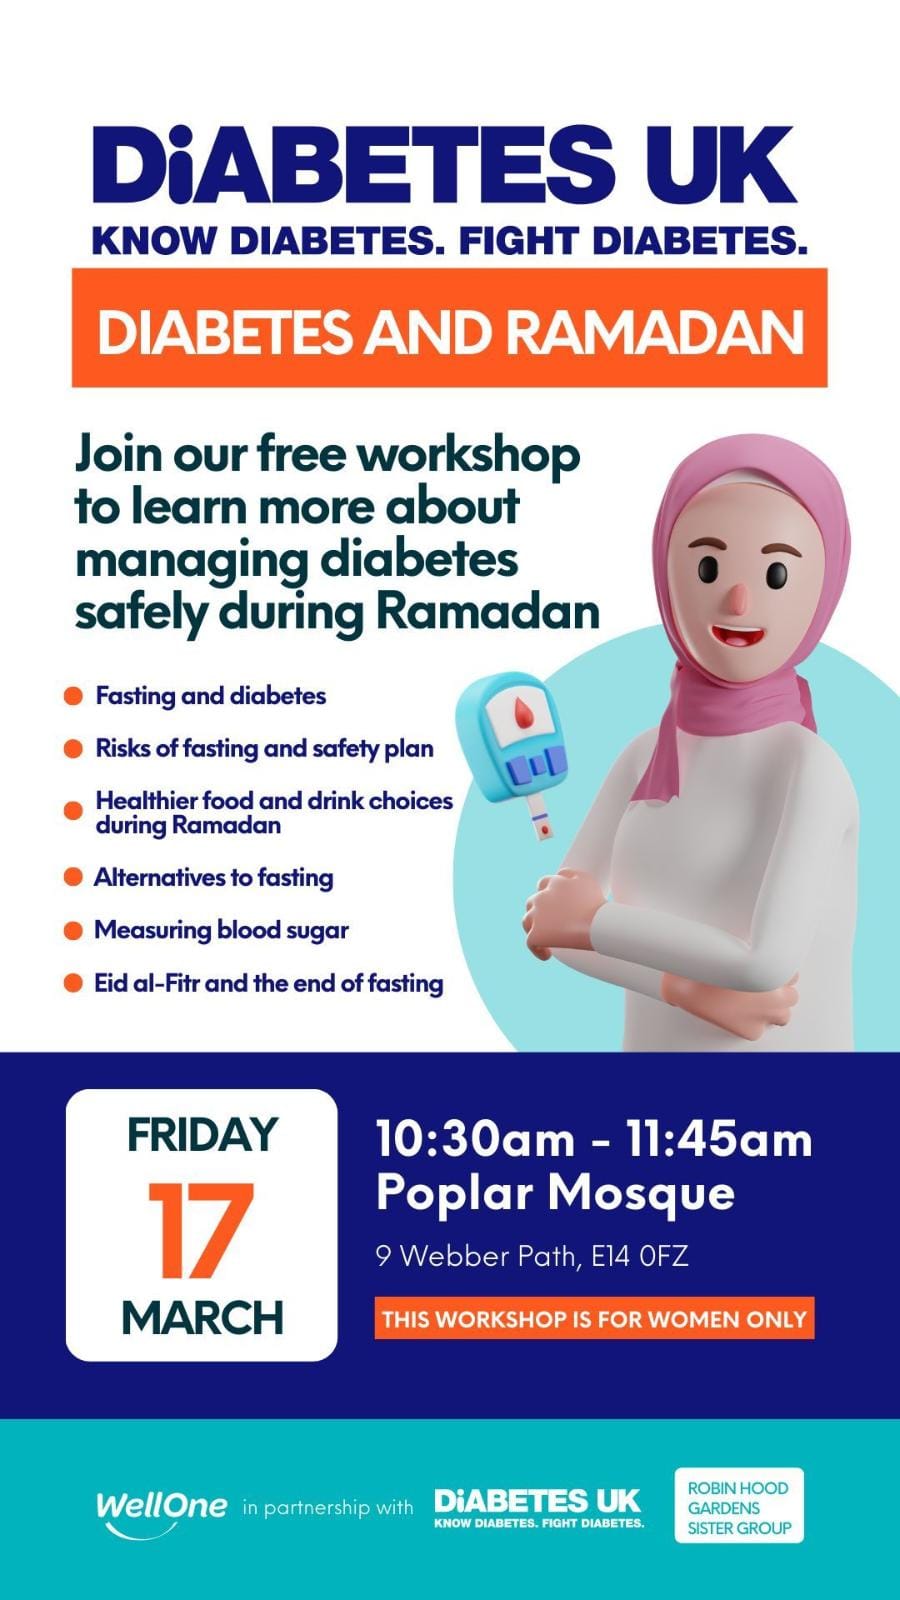 Flyer promoting a workshop on Diabetes and Ramadan